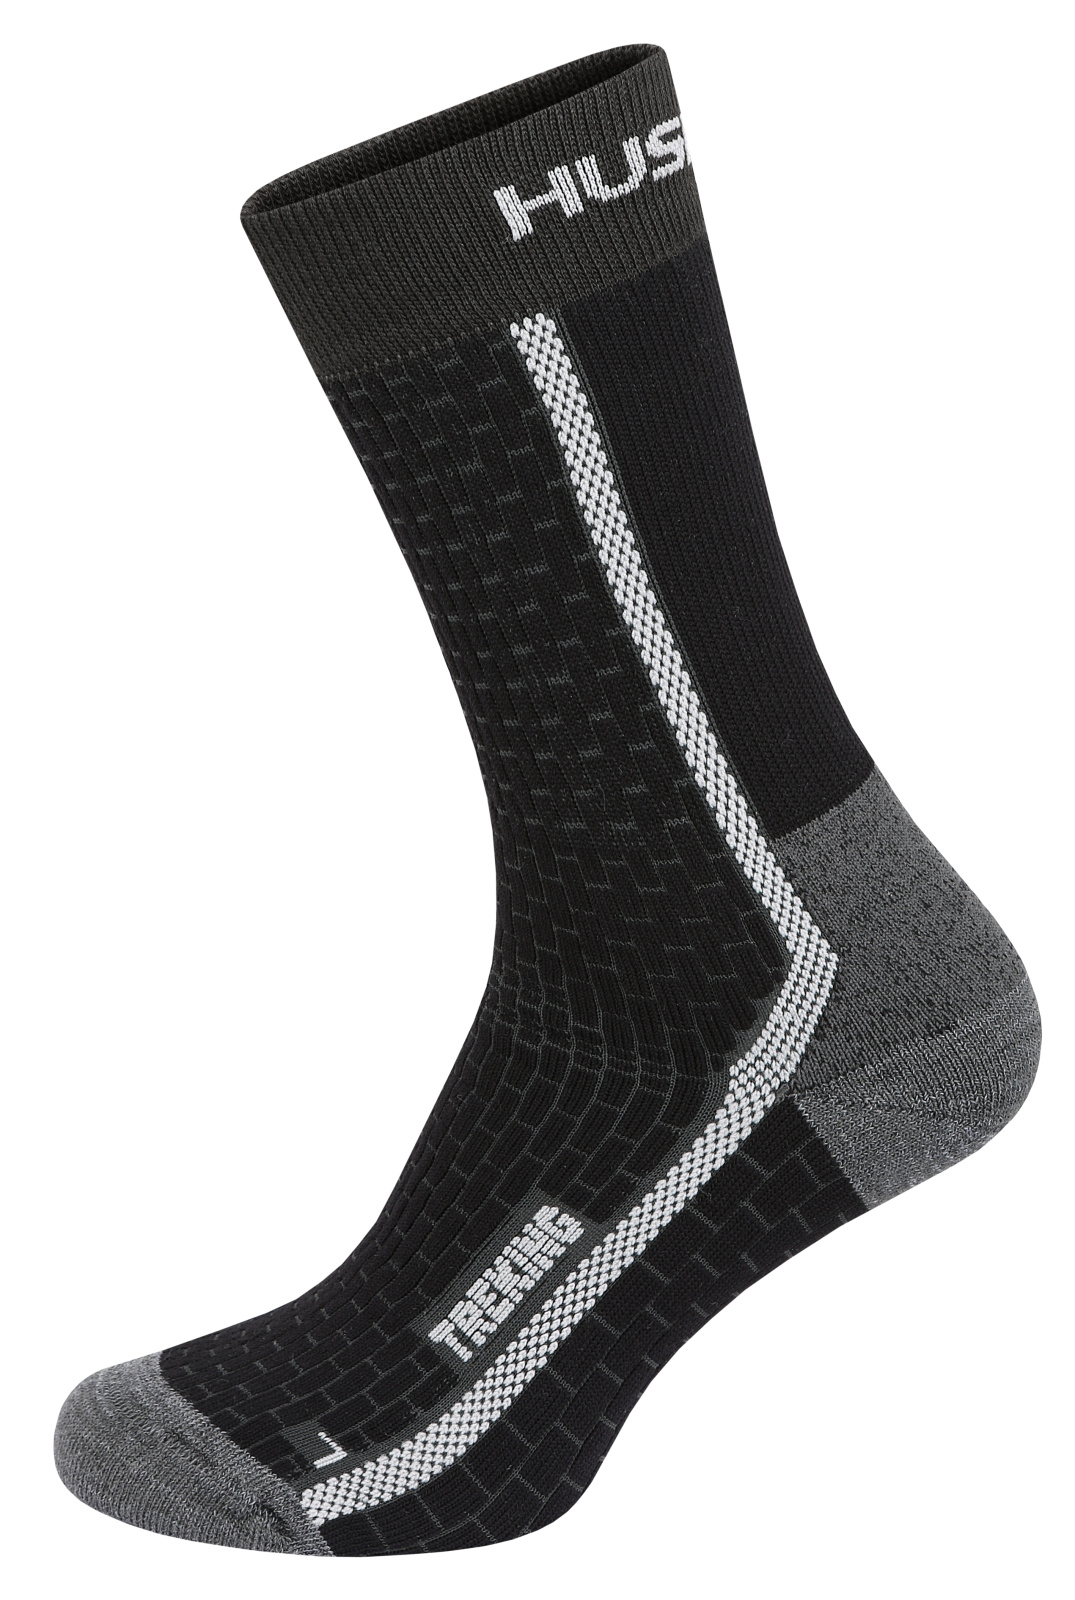 HUSKY Treking Socks Black/grey